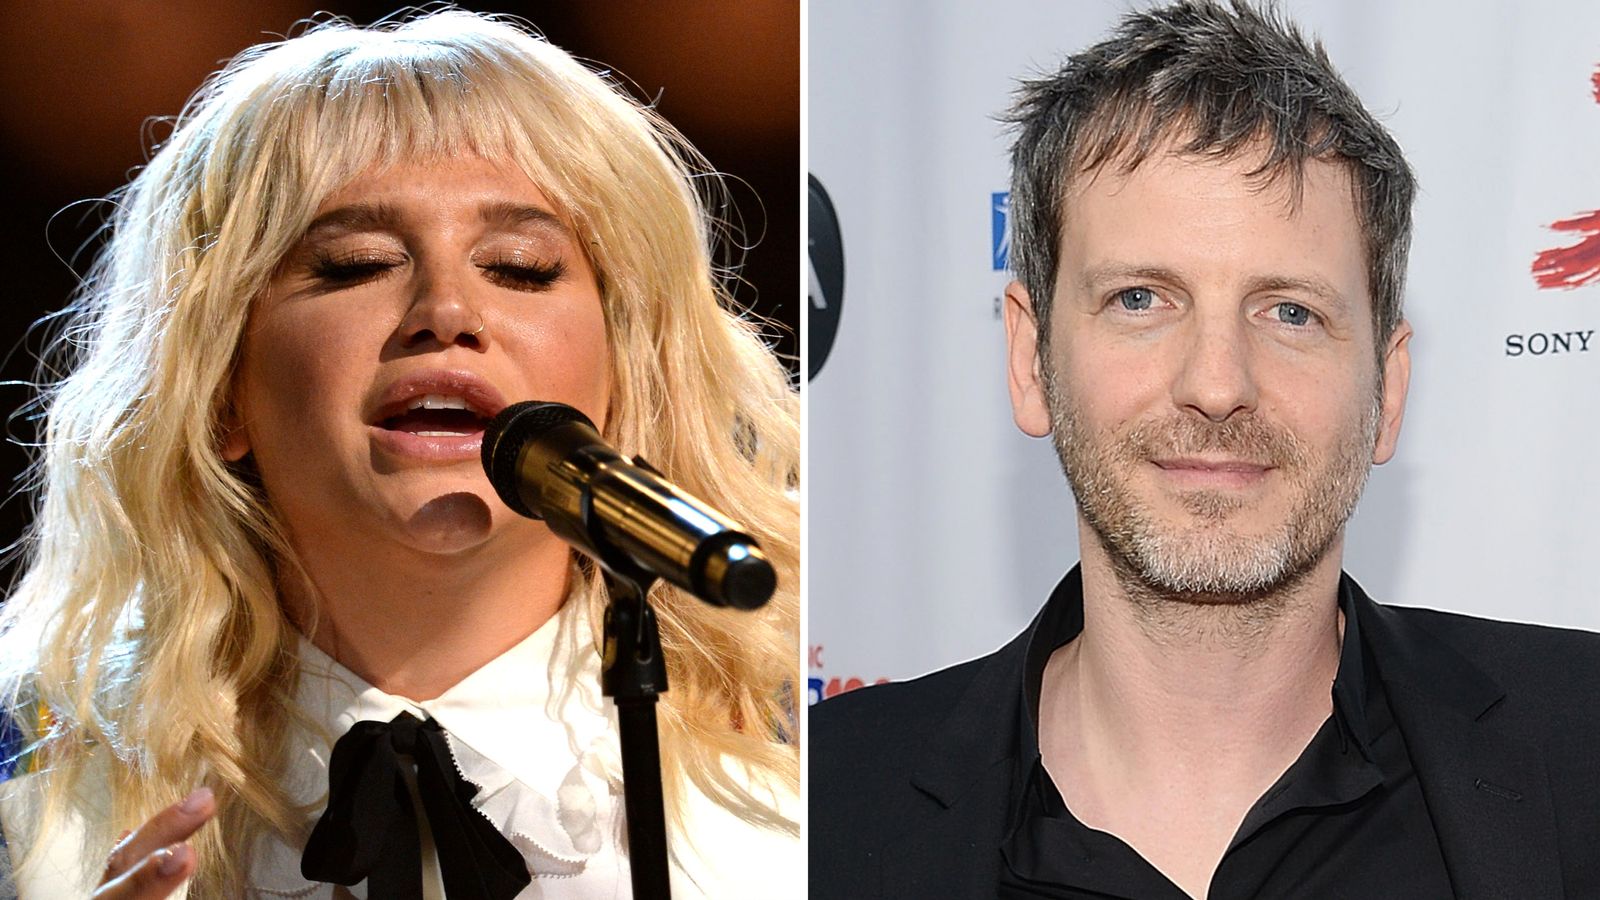 Kesha and music producer Dr Luke settle defamation lawsuit after she accused him of rape